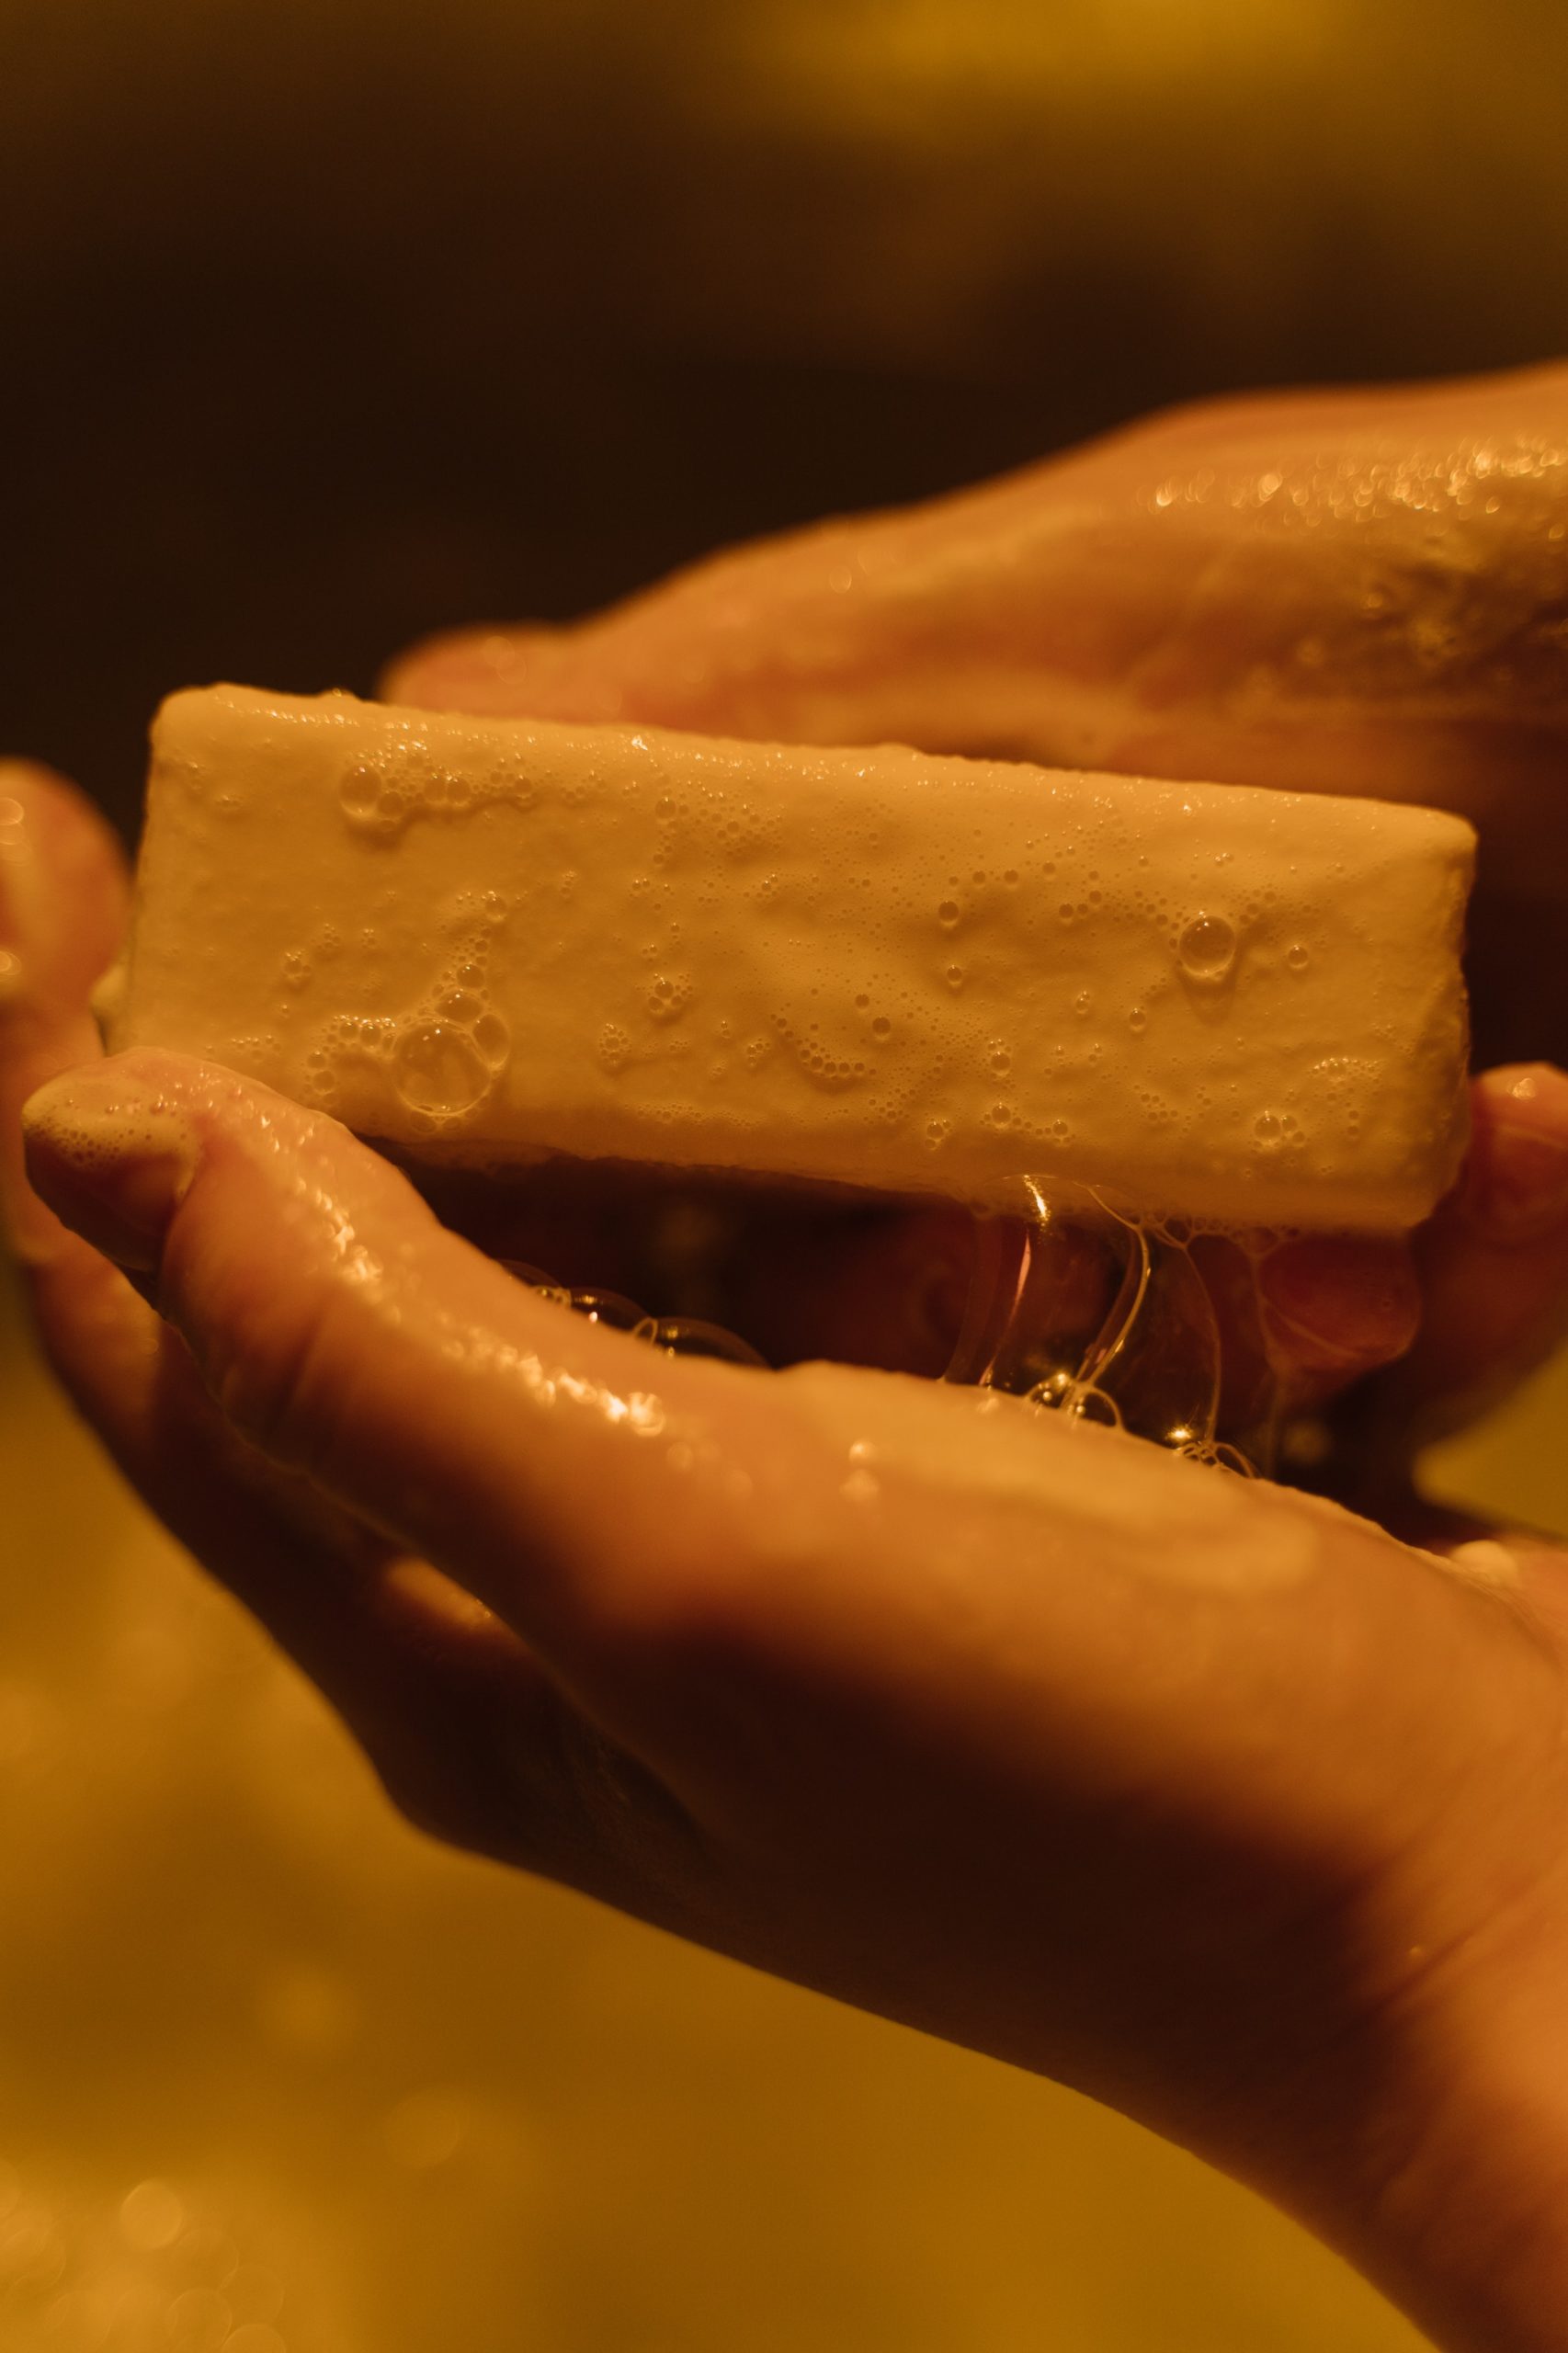 A closeup of hands holding a wet bar of soap